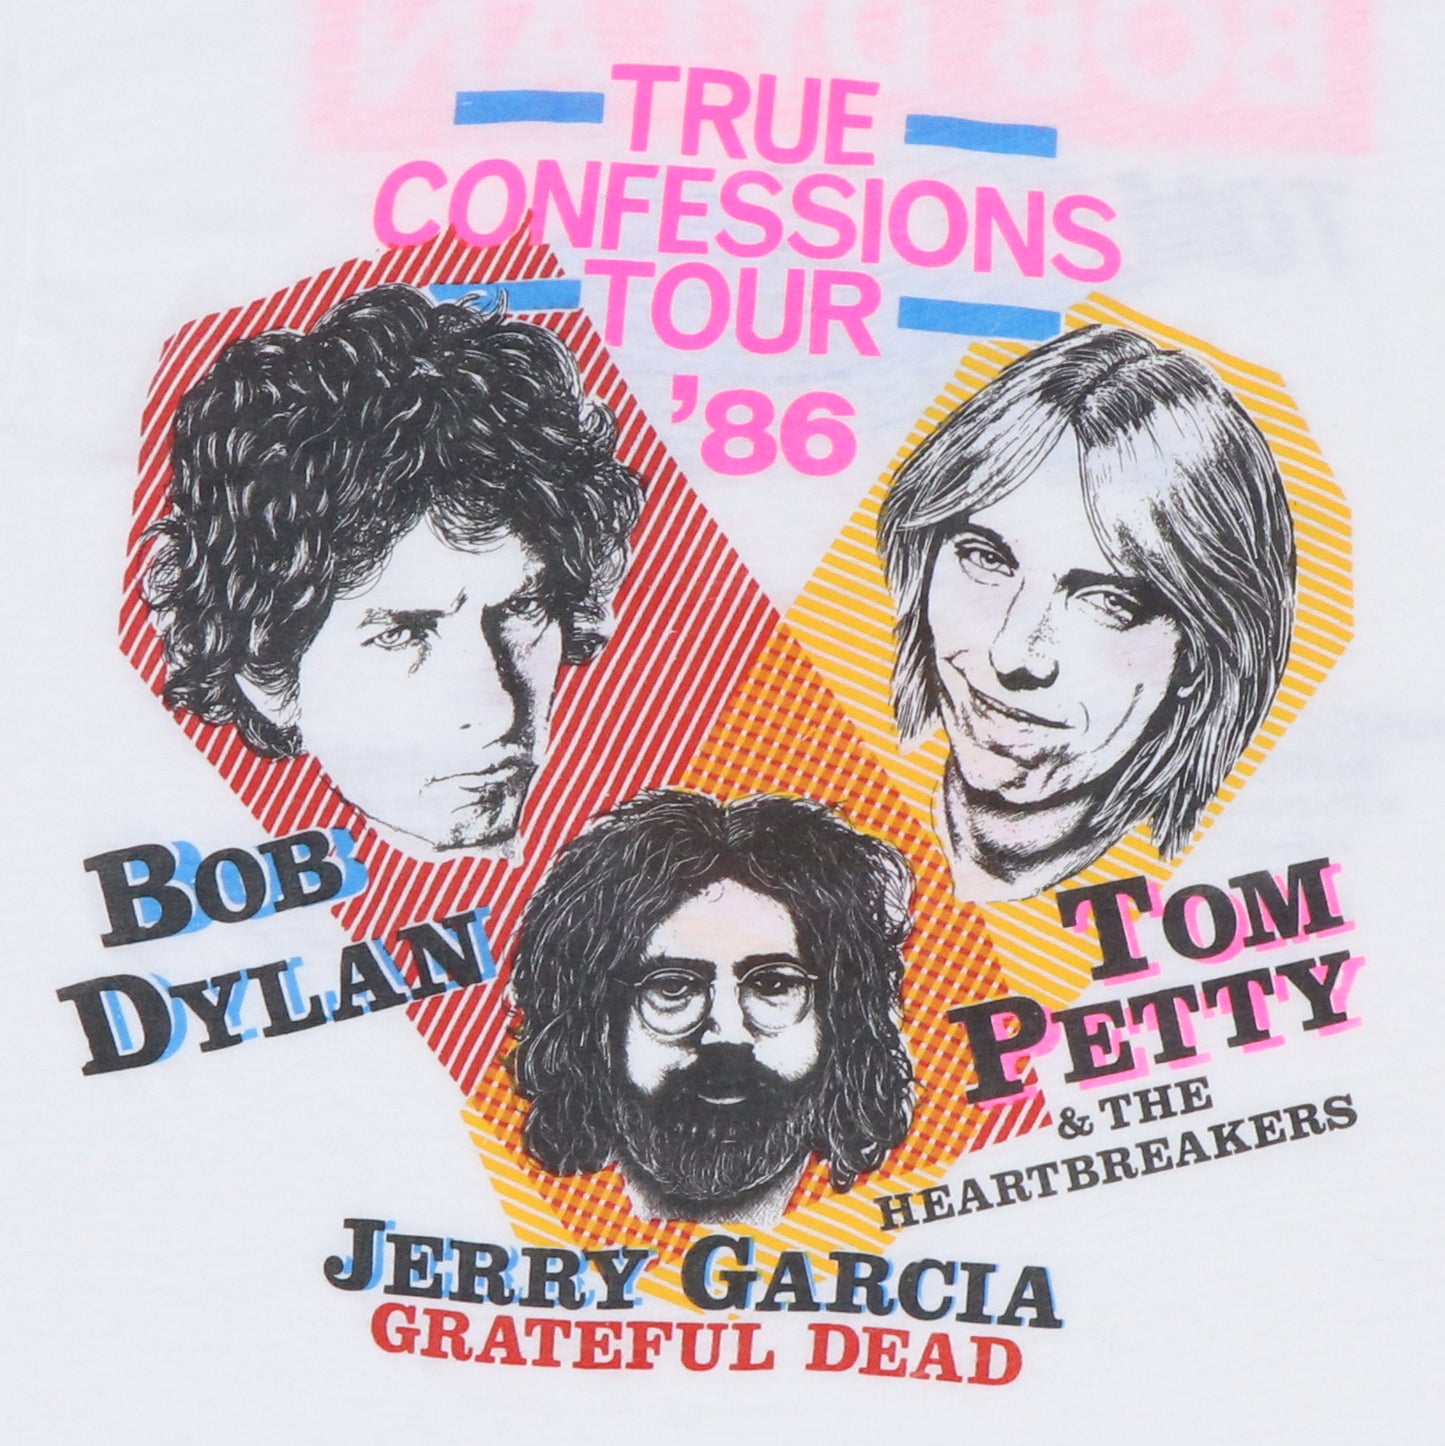 1986 Bob Dylan Tom Petty Jerry Garcia Concert Shirt